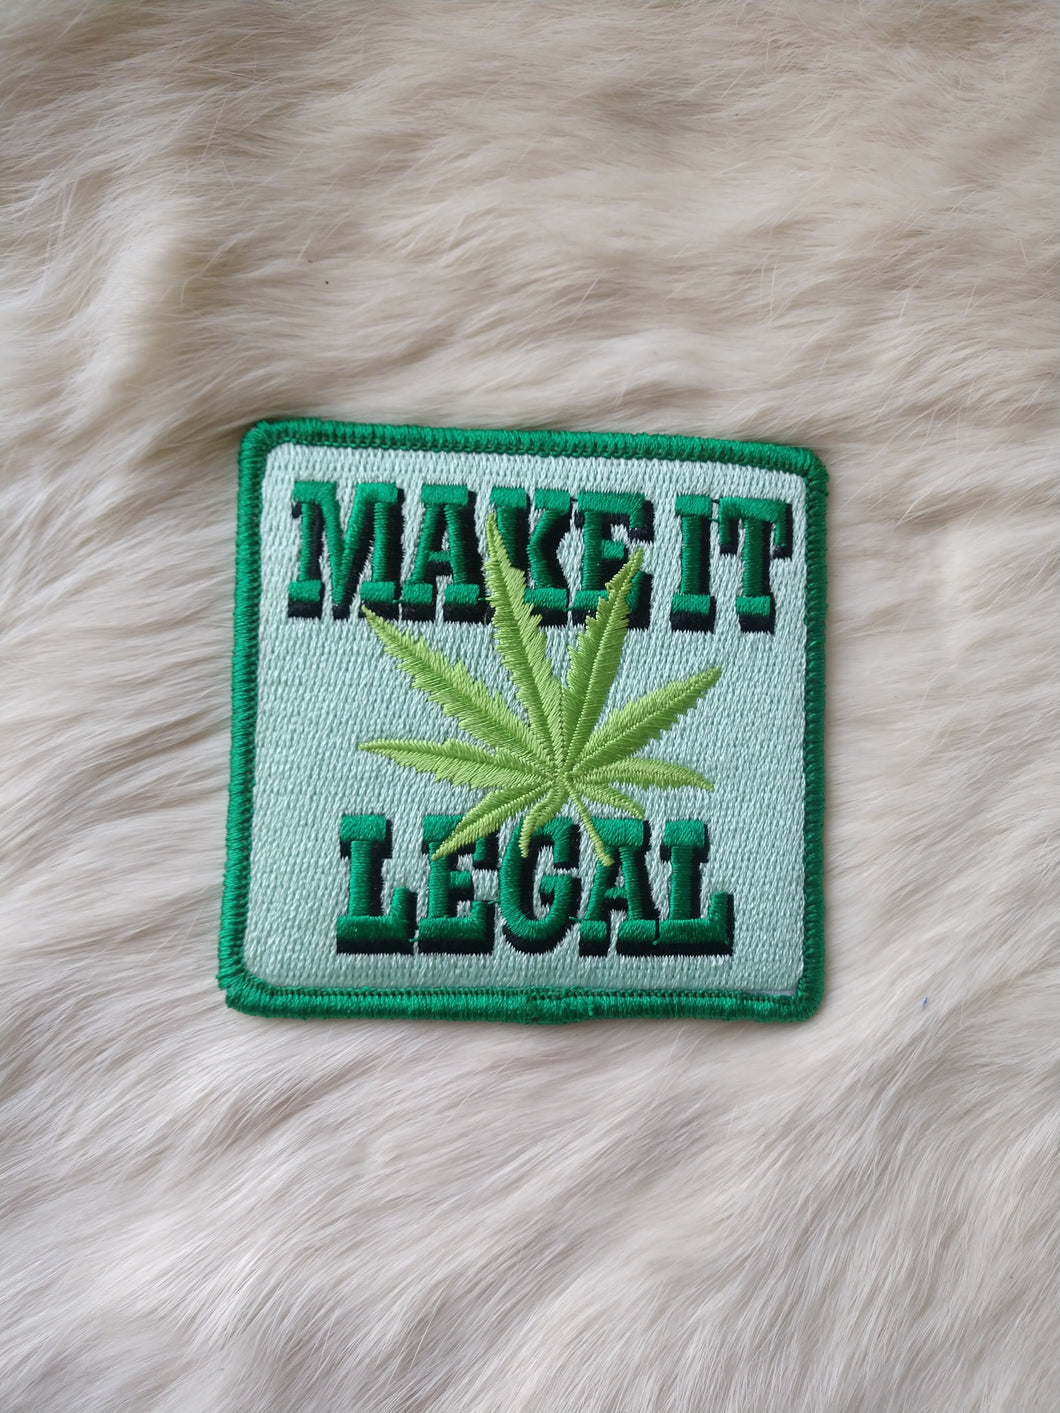 Make It Legal Patch